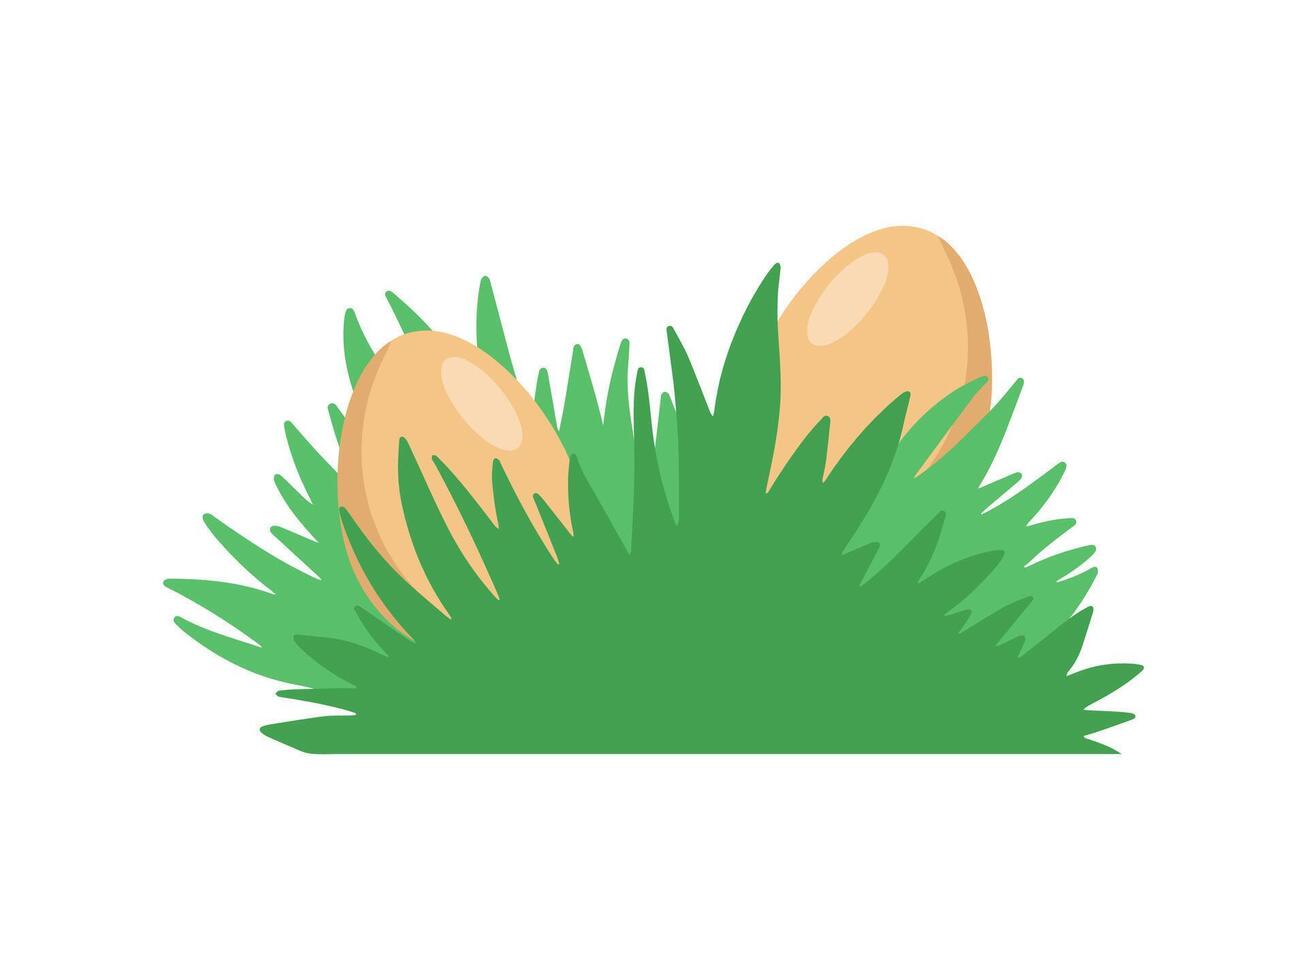 Pascua de Resurrección huevos antecedentes acostado en césped vector